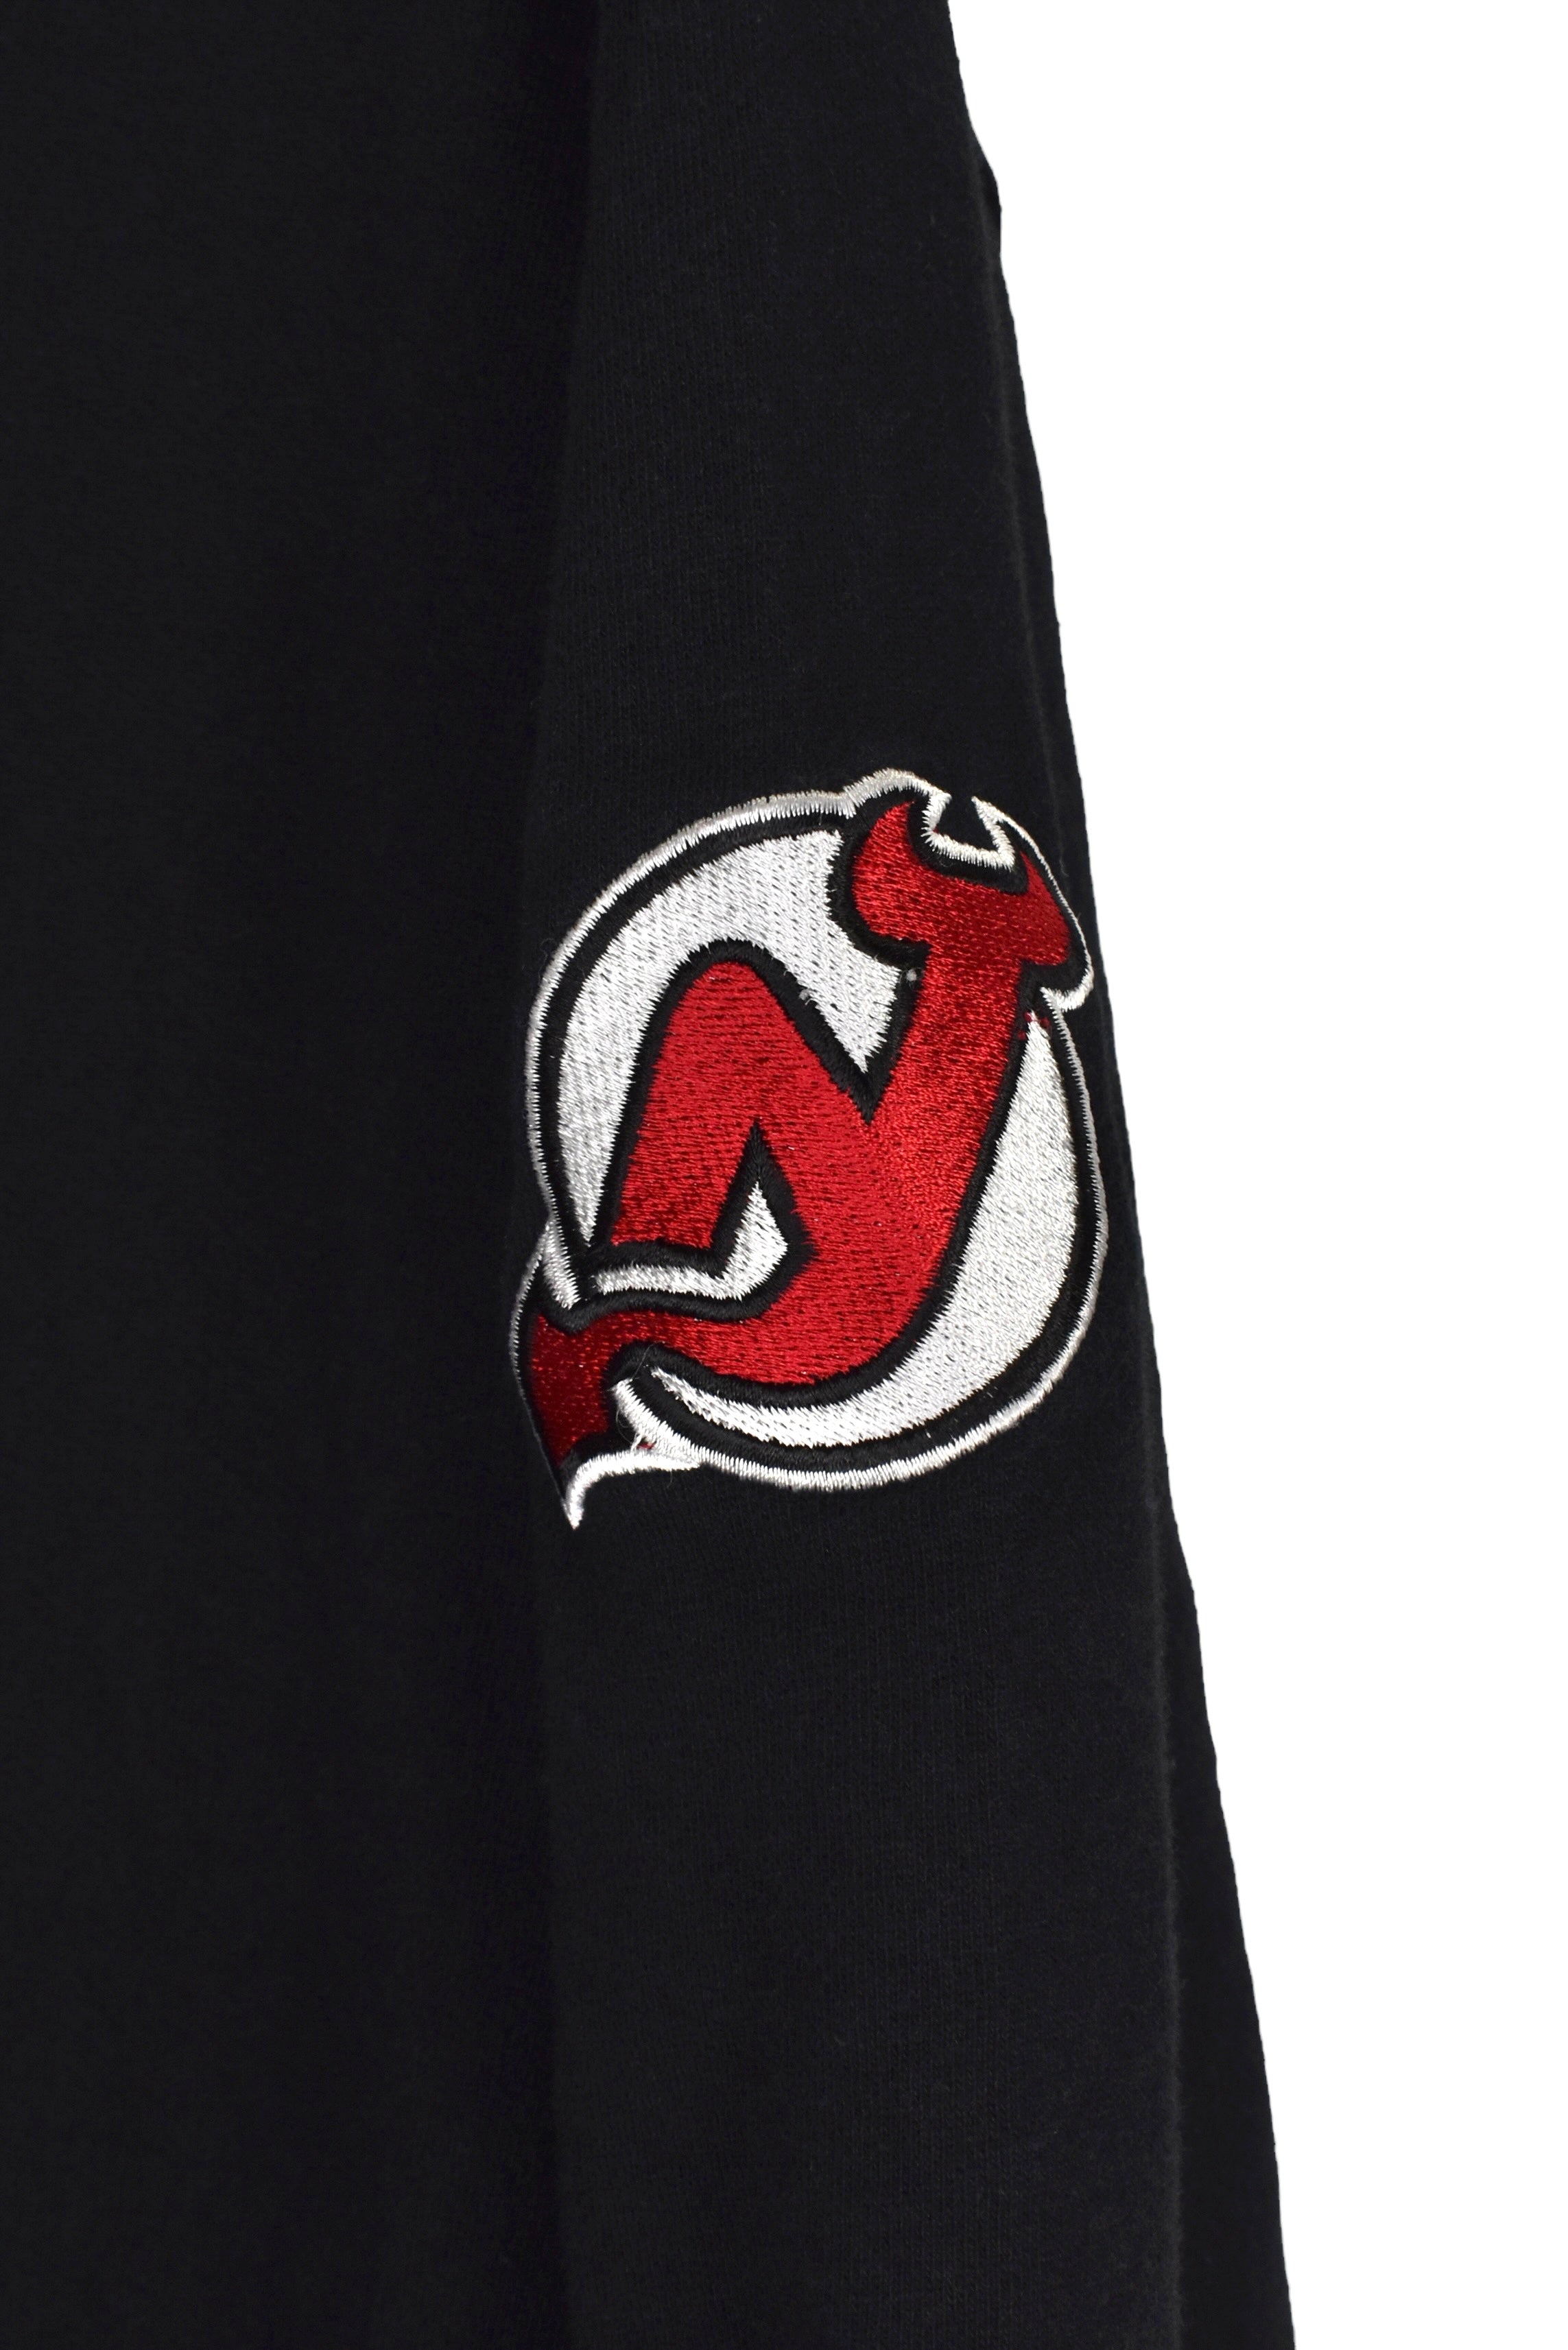 Vintage New Jersey Devils hoodie (L), black NHL embroidered sweatshirt